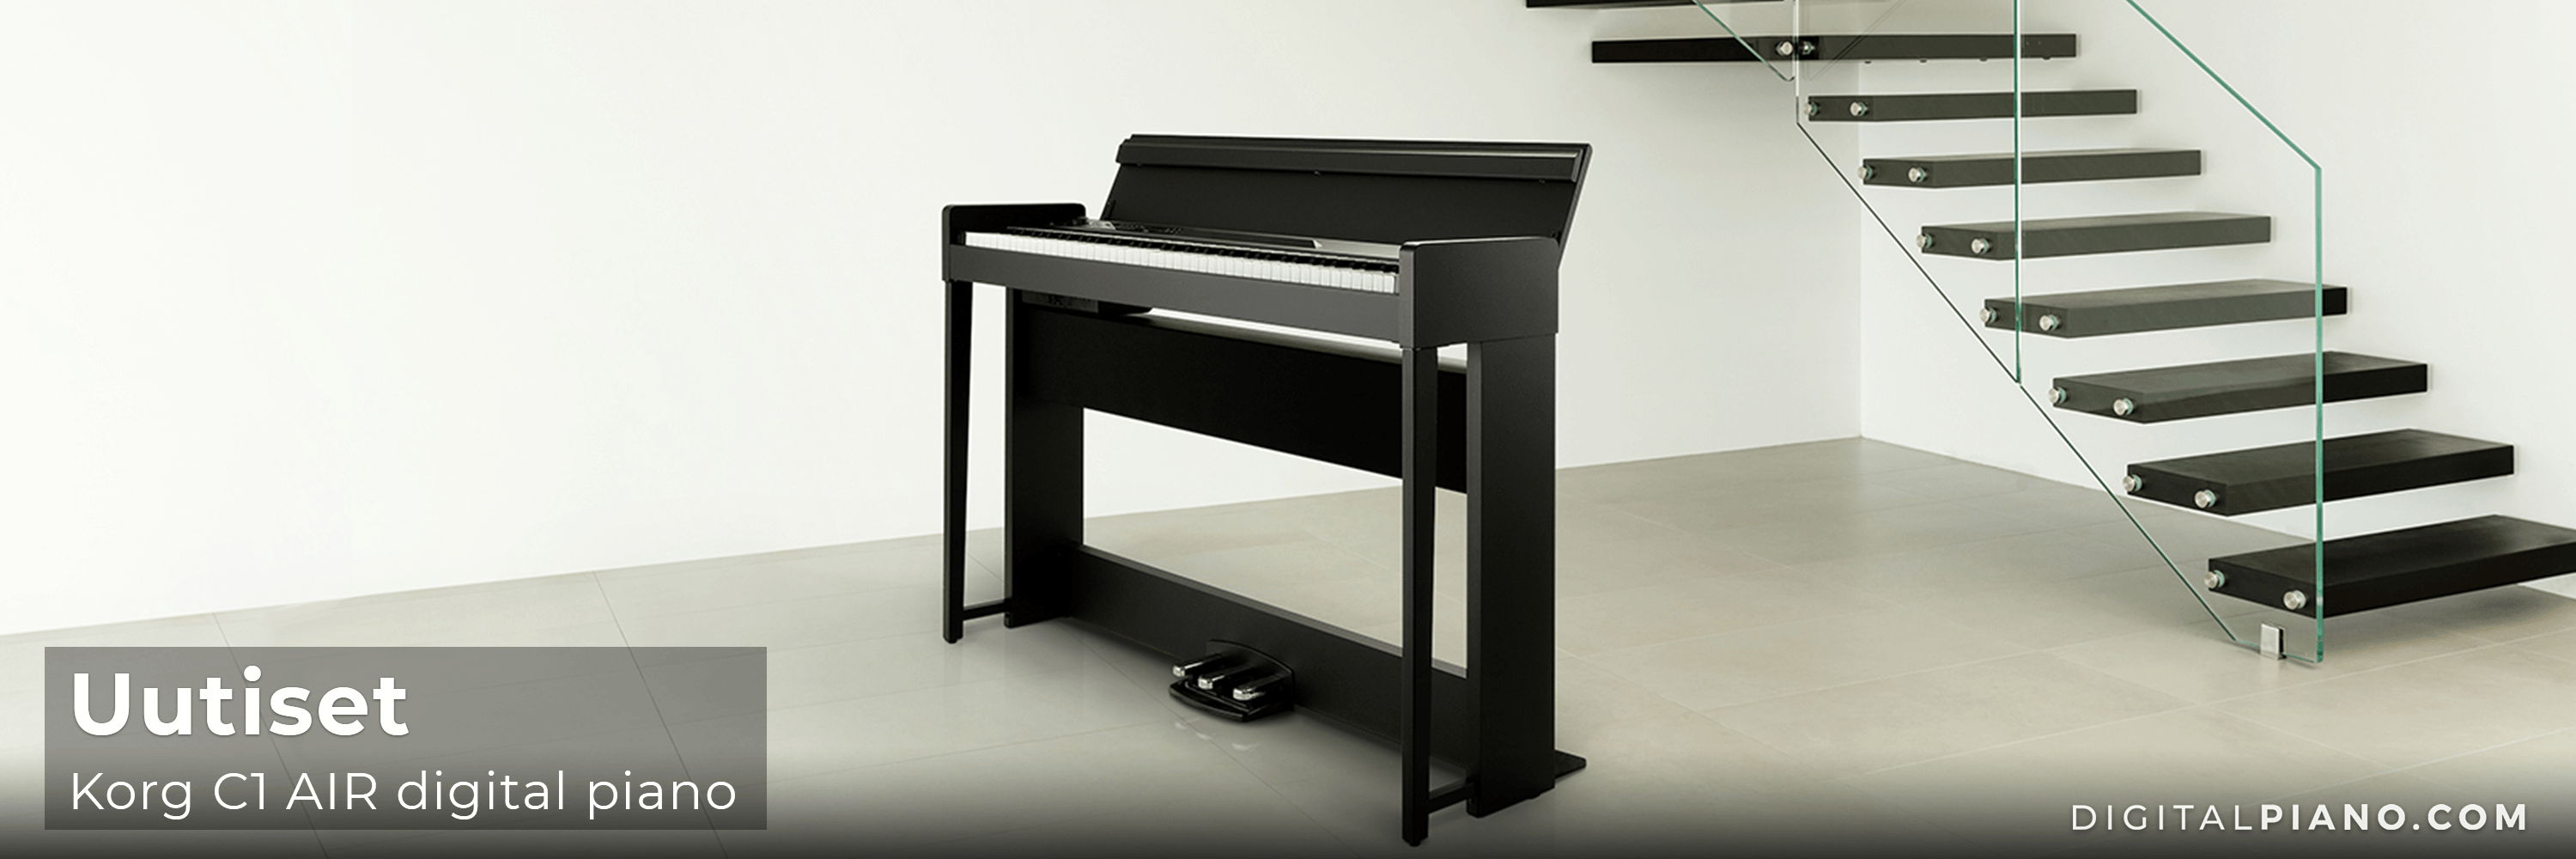 Uutiset - Korg C1 AIR Digital Piano